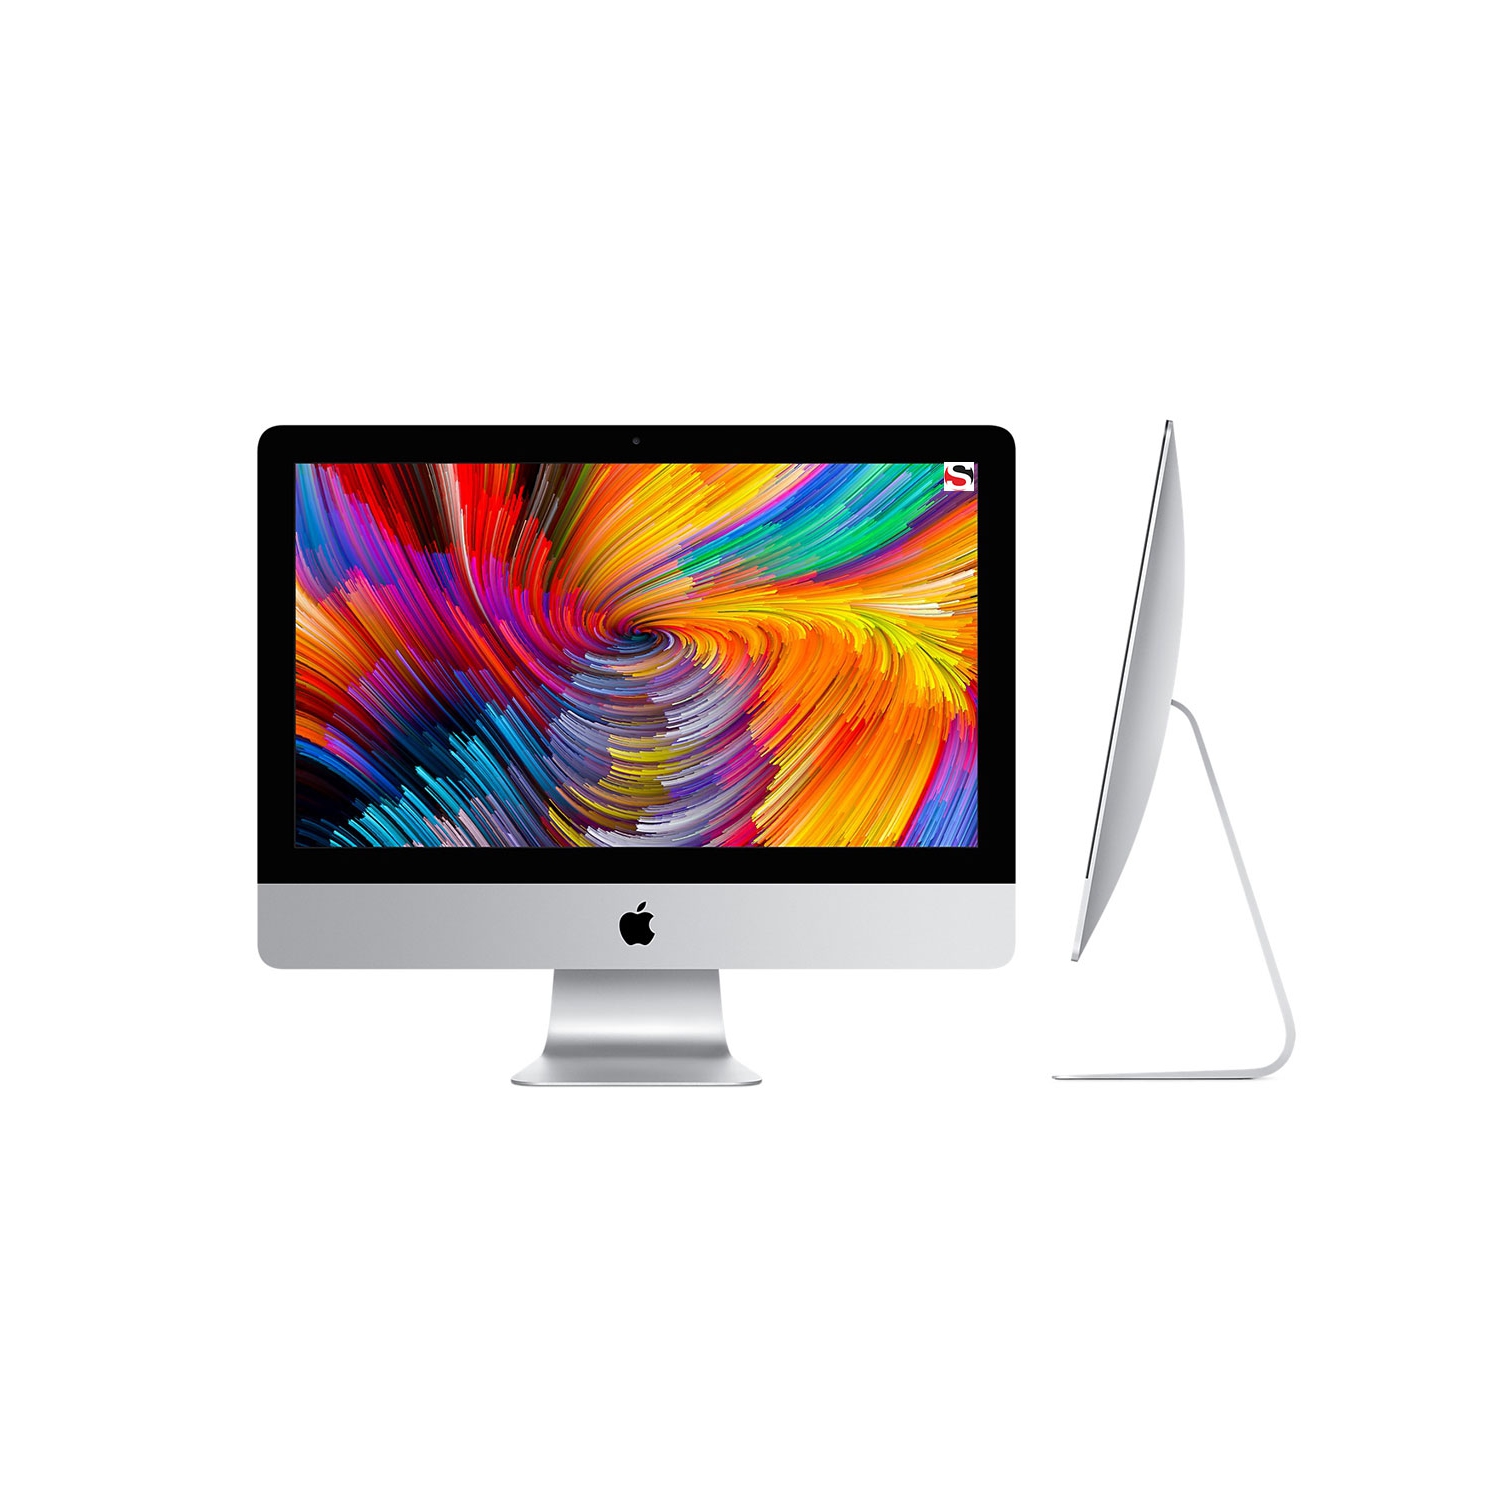 Apple iMac 21.5-Inch-CORE I5 (7400)-3.0GHZ-8GB RAM-1 TB HDD-Retina 4K-Mid-2017 - MNDY2LL/A - A1418-Refurbished(Grdae A-Like New) with Wireless Magic Keyboard & Mouse